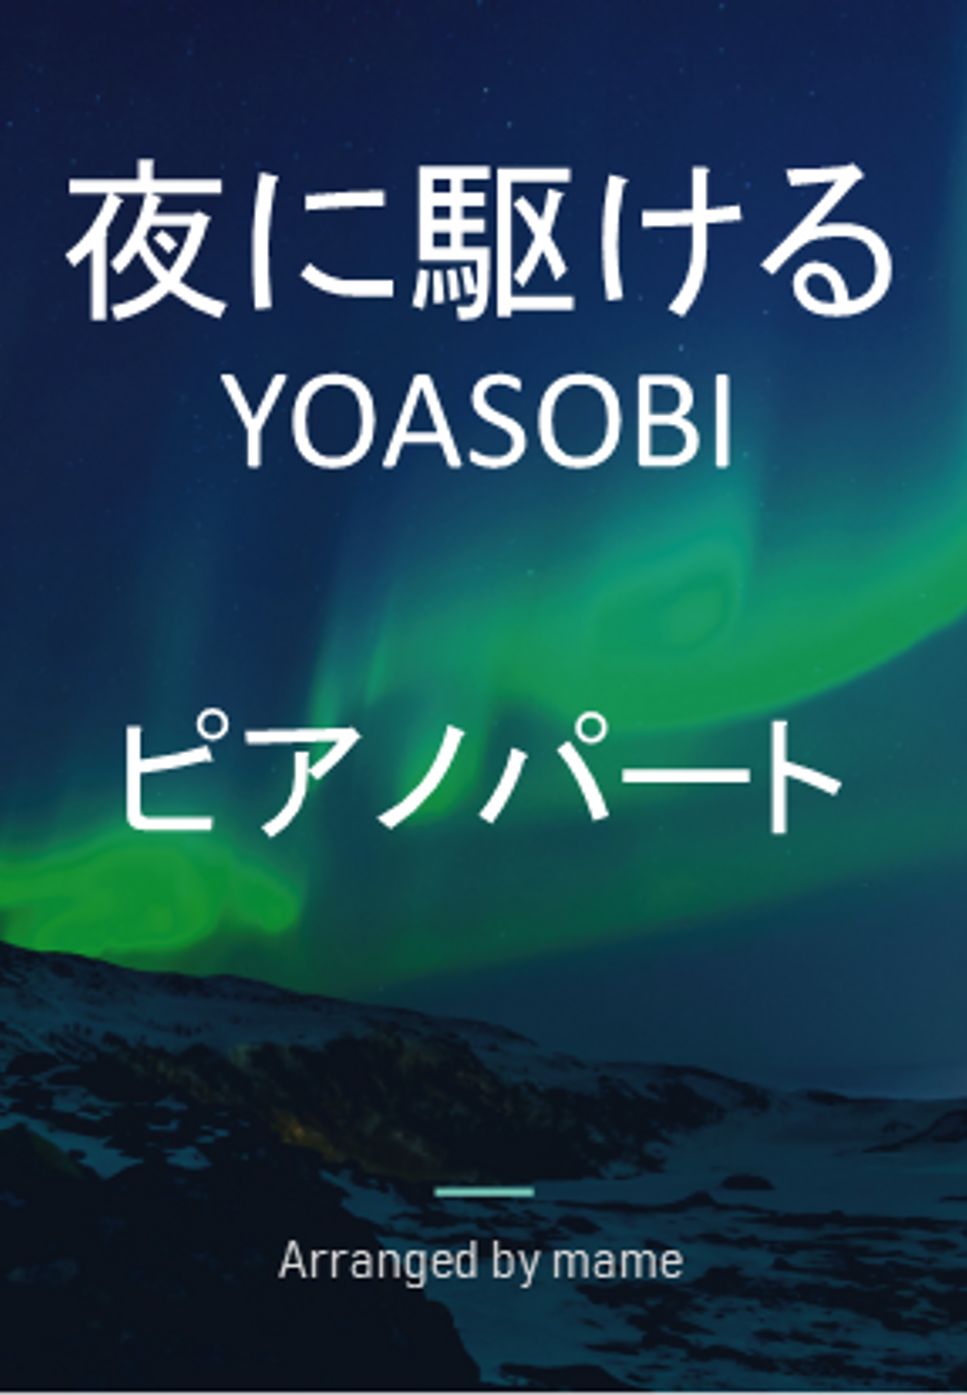 YOASOBI - 夜に駆ける (piano part) by mame